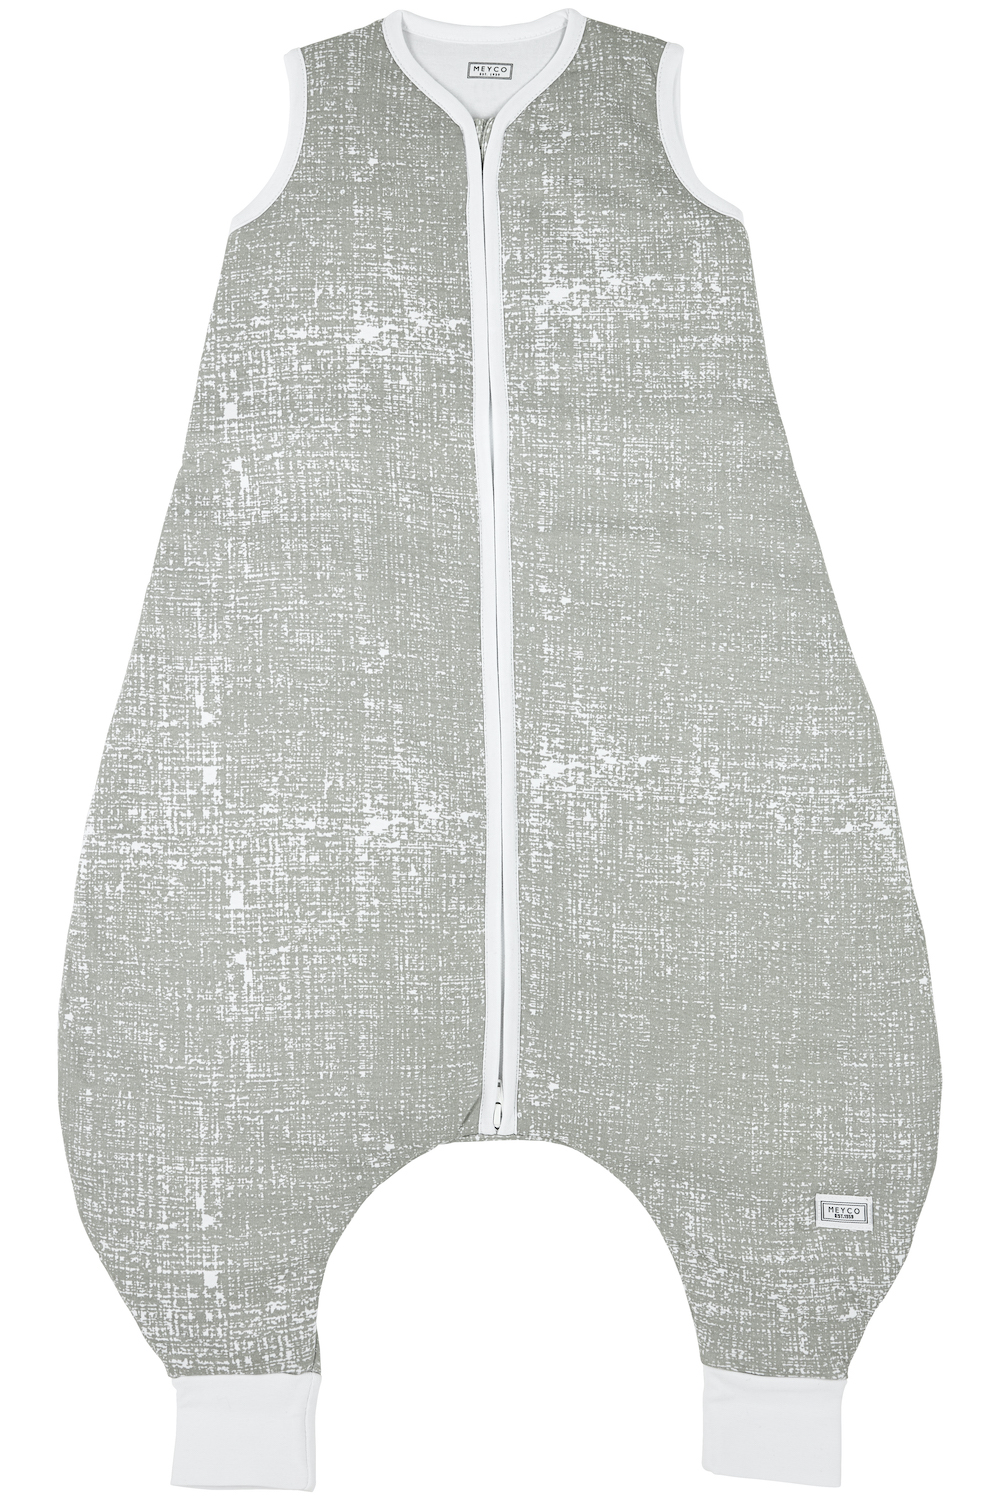 Baby winter slaapoverall jumper Fine Lines - grey - 80cm